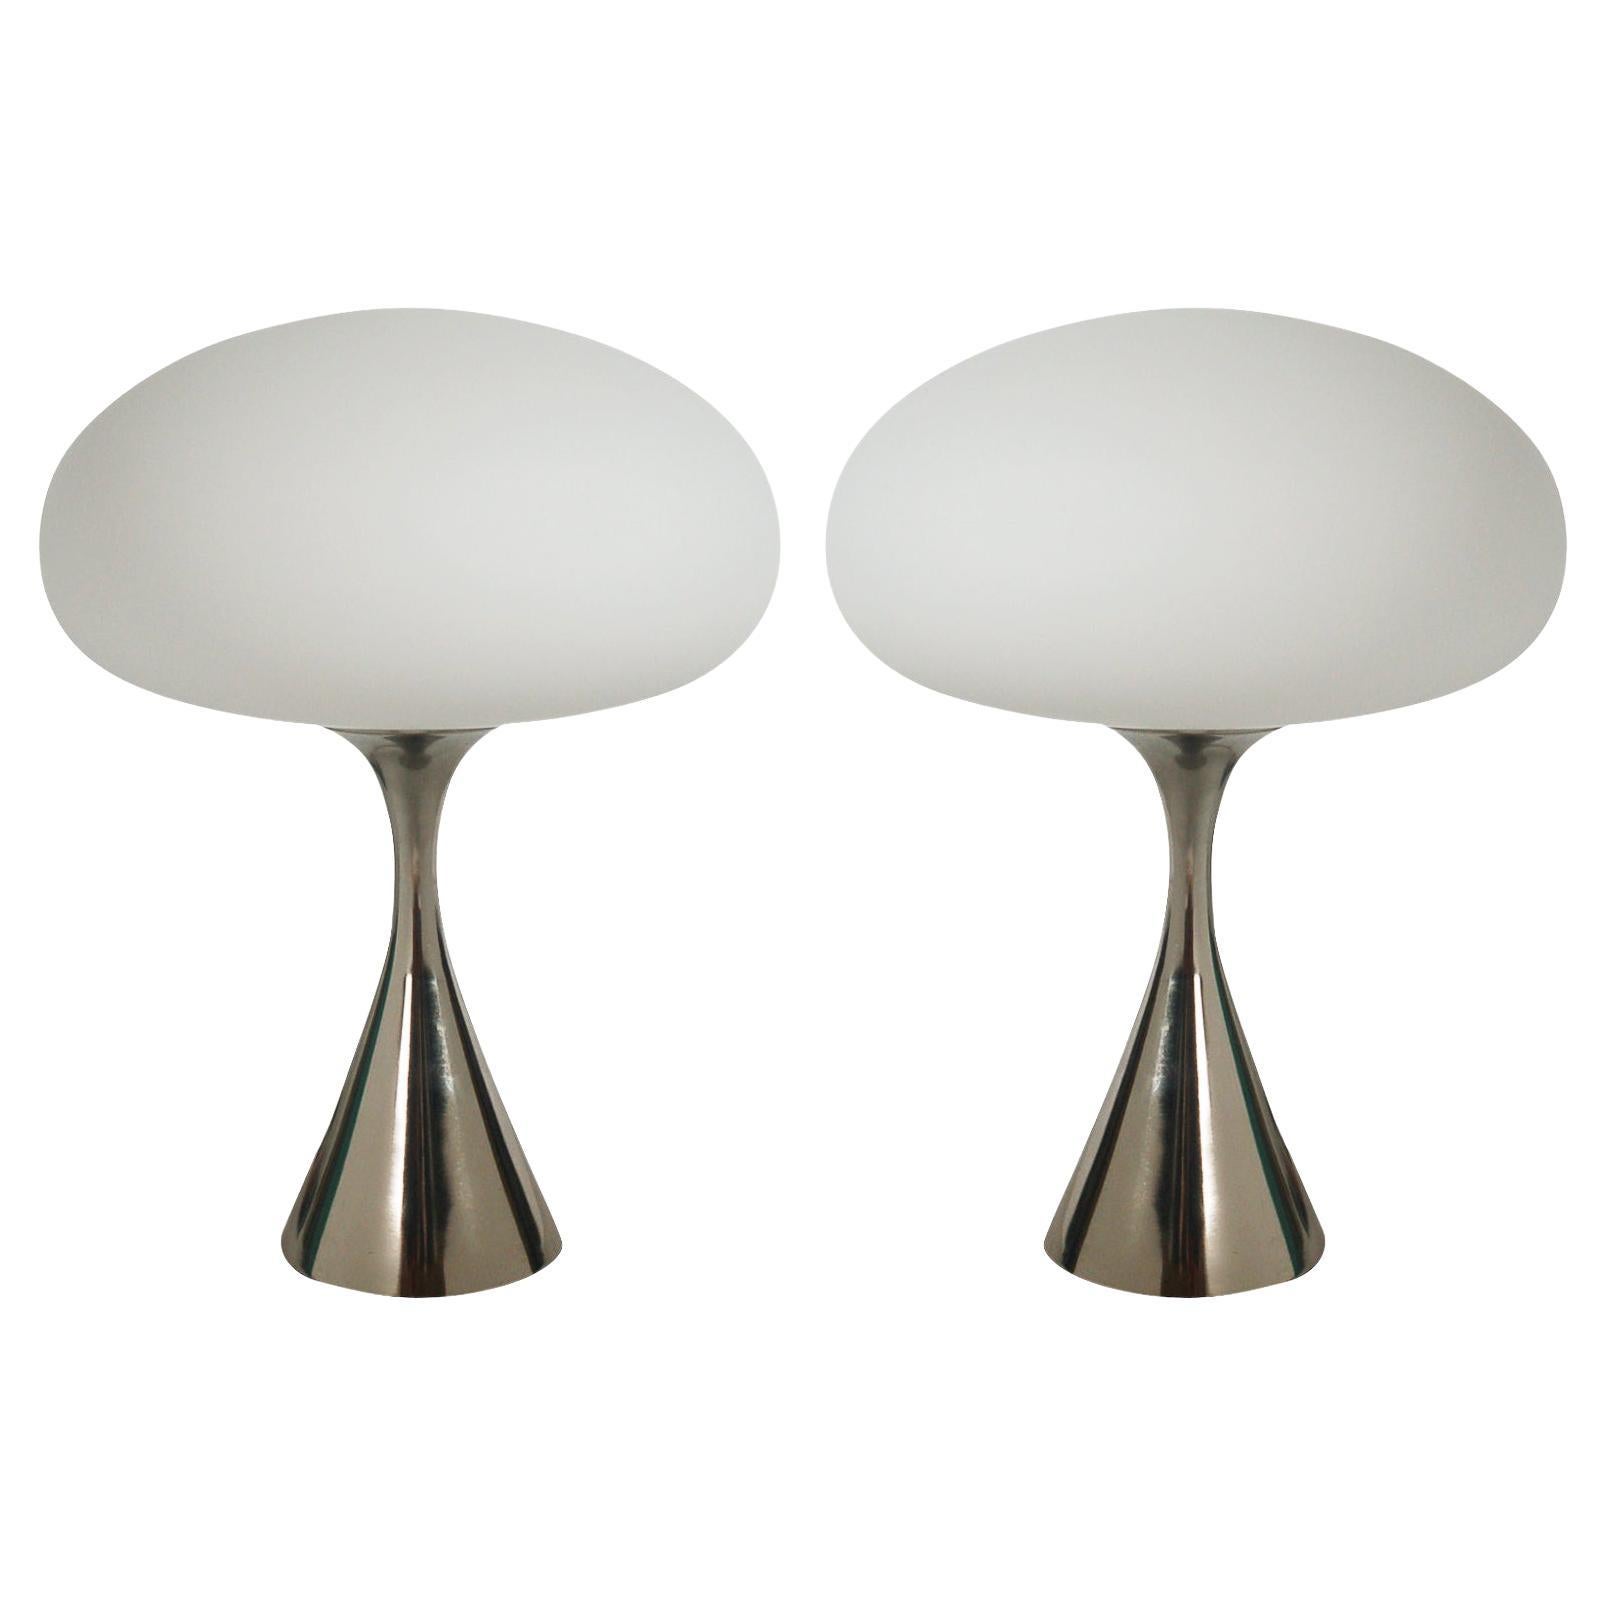 Pair of Mid-Century Modern Laurel Mushroom Table Lamps in Chrome / Silver